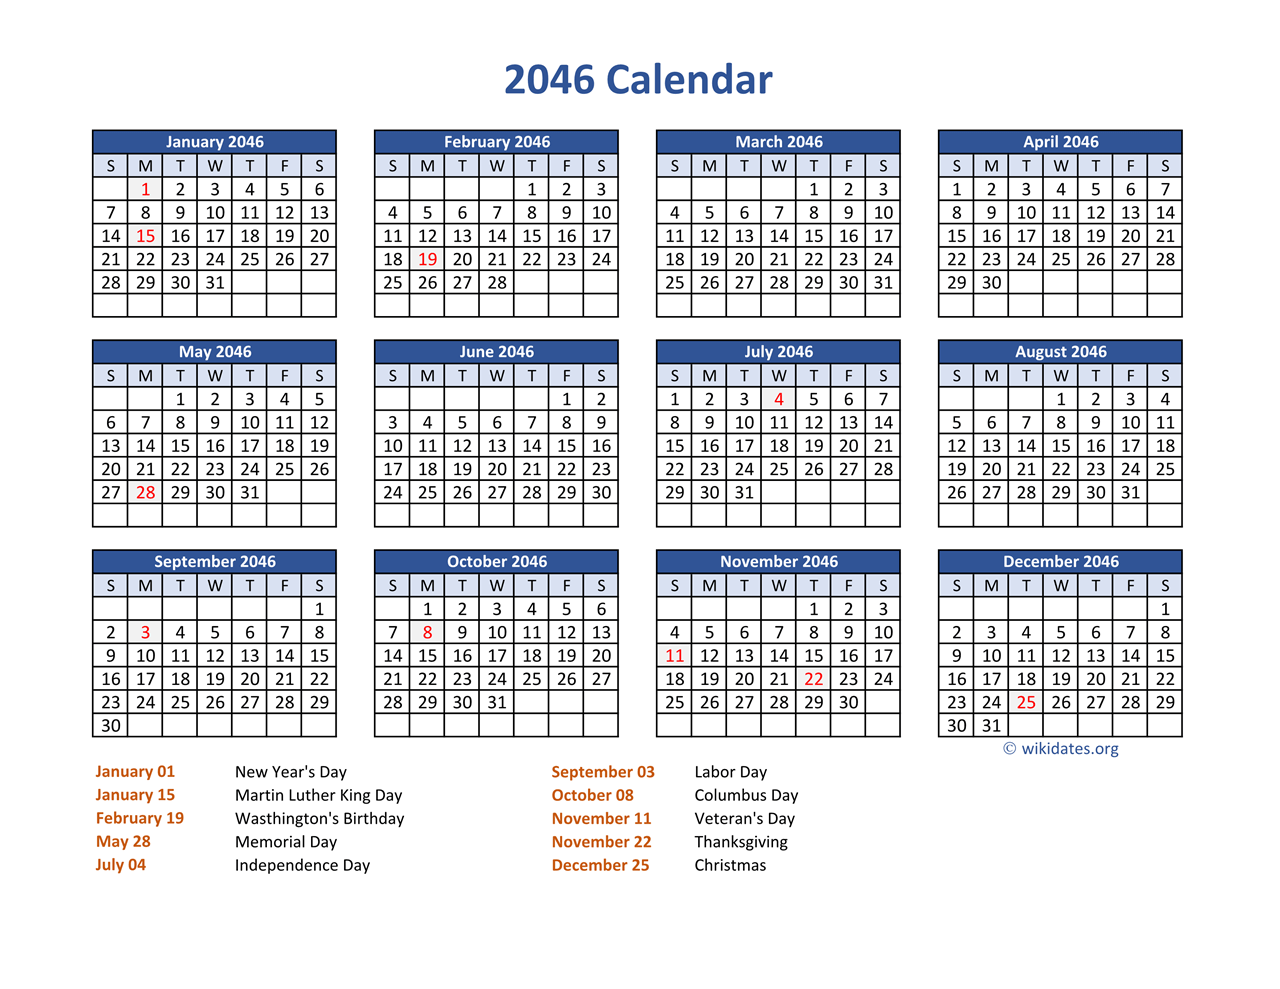 PDF Calendar 2046 With Federal Holidays WikiDates